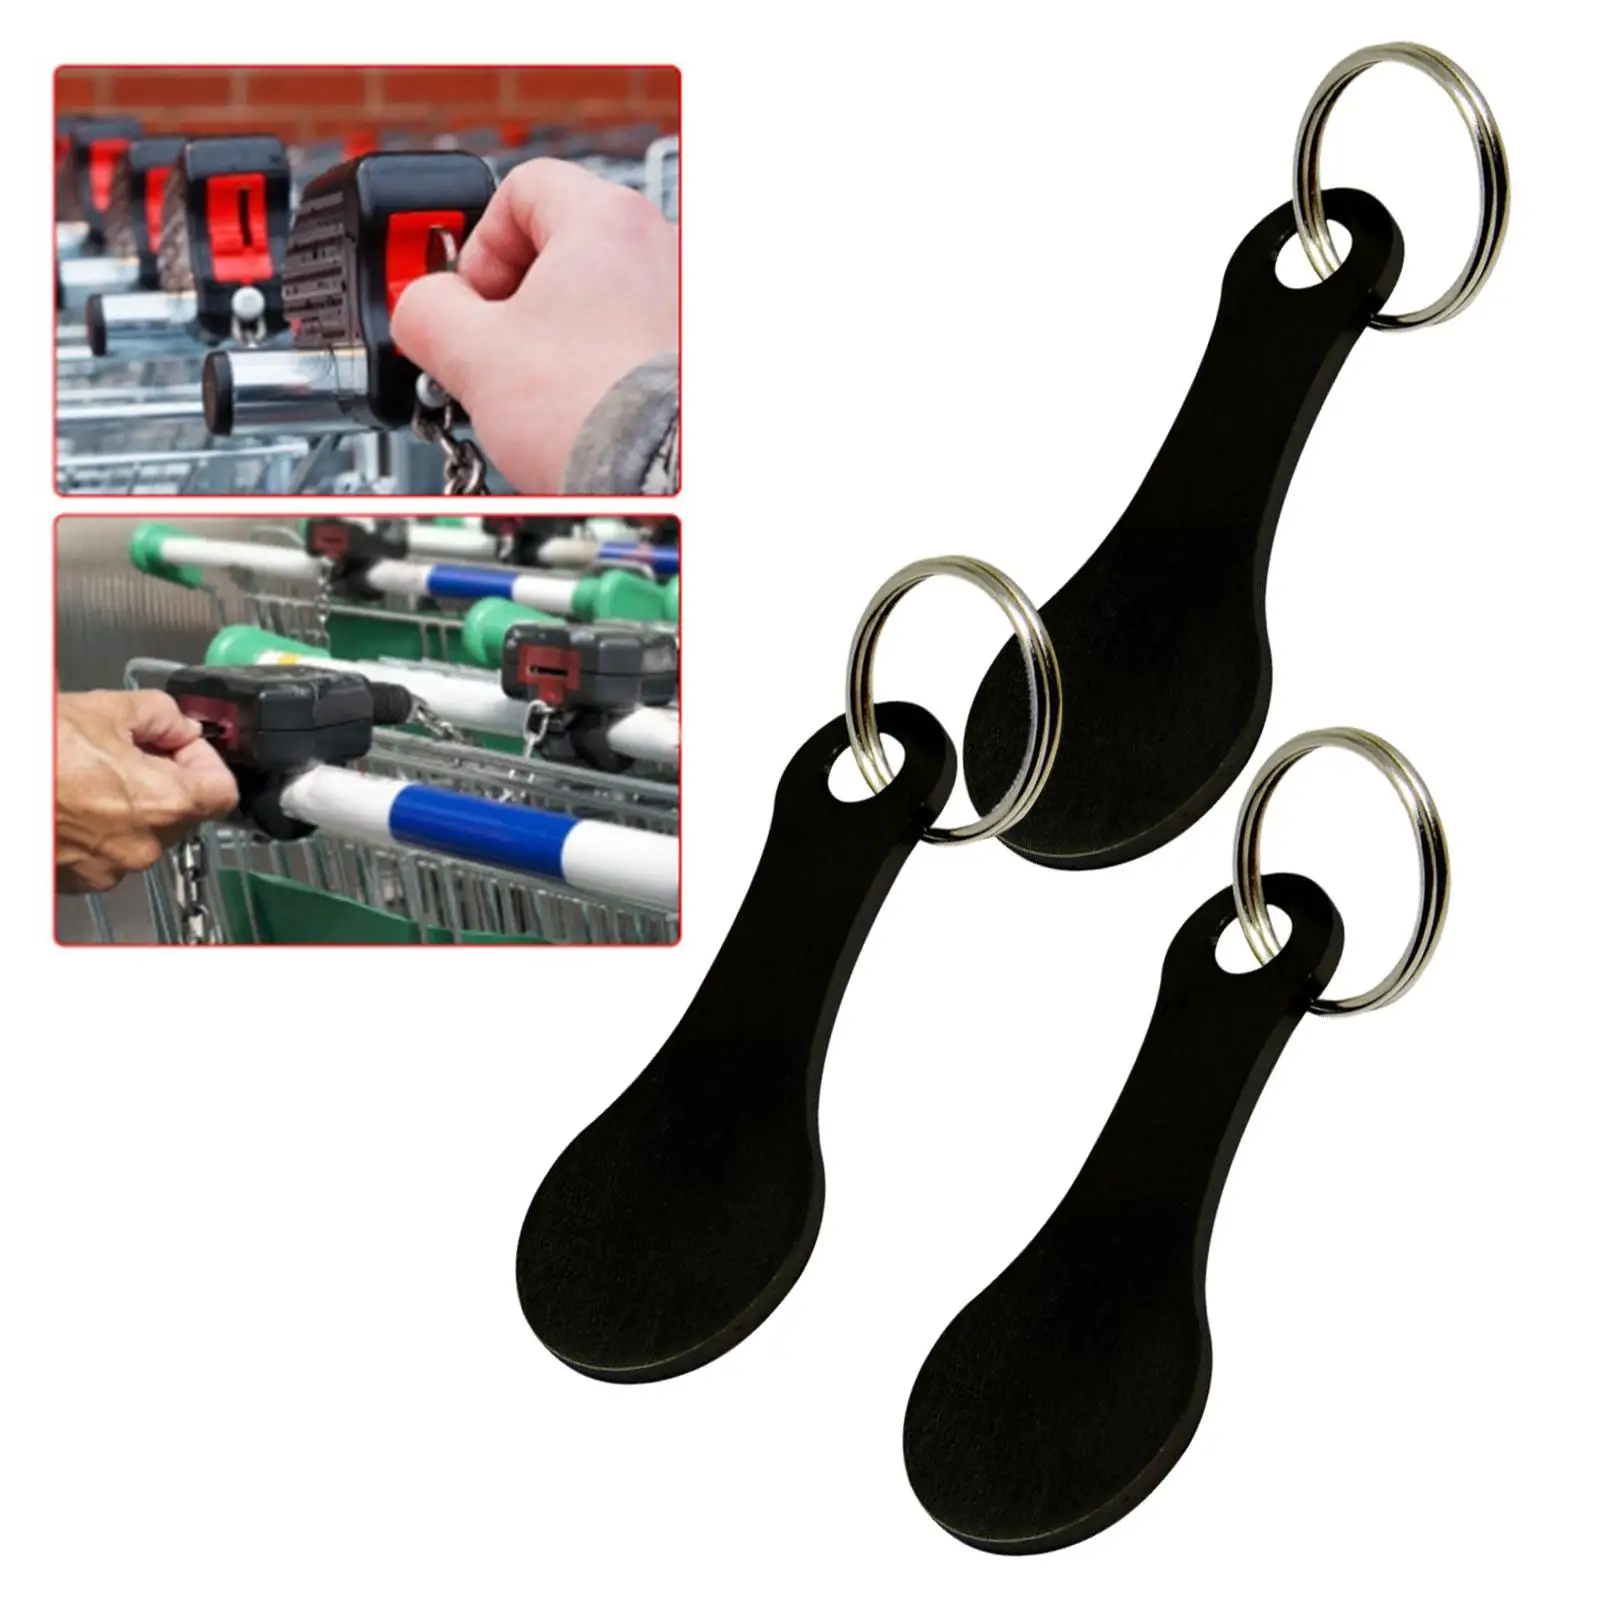 3x Shopping Trolley Tokens Release Keys Lightweight Portable Stable Black Keyrings for Coin Holder Grocery Cart Decor Bracelet